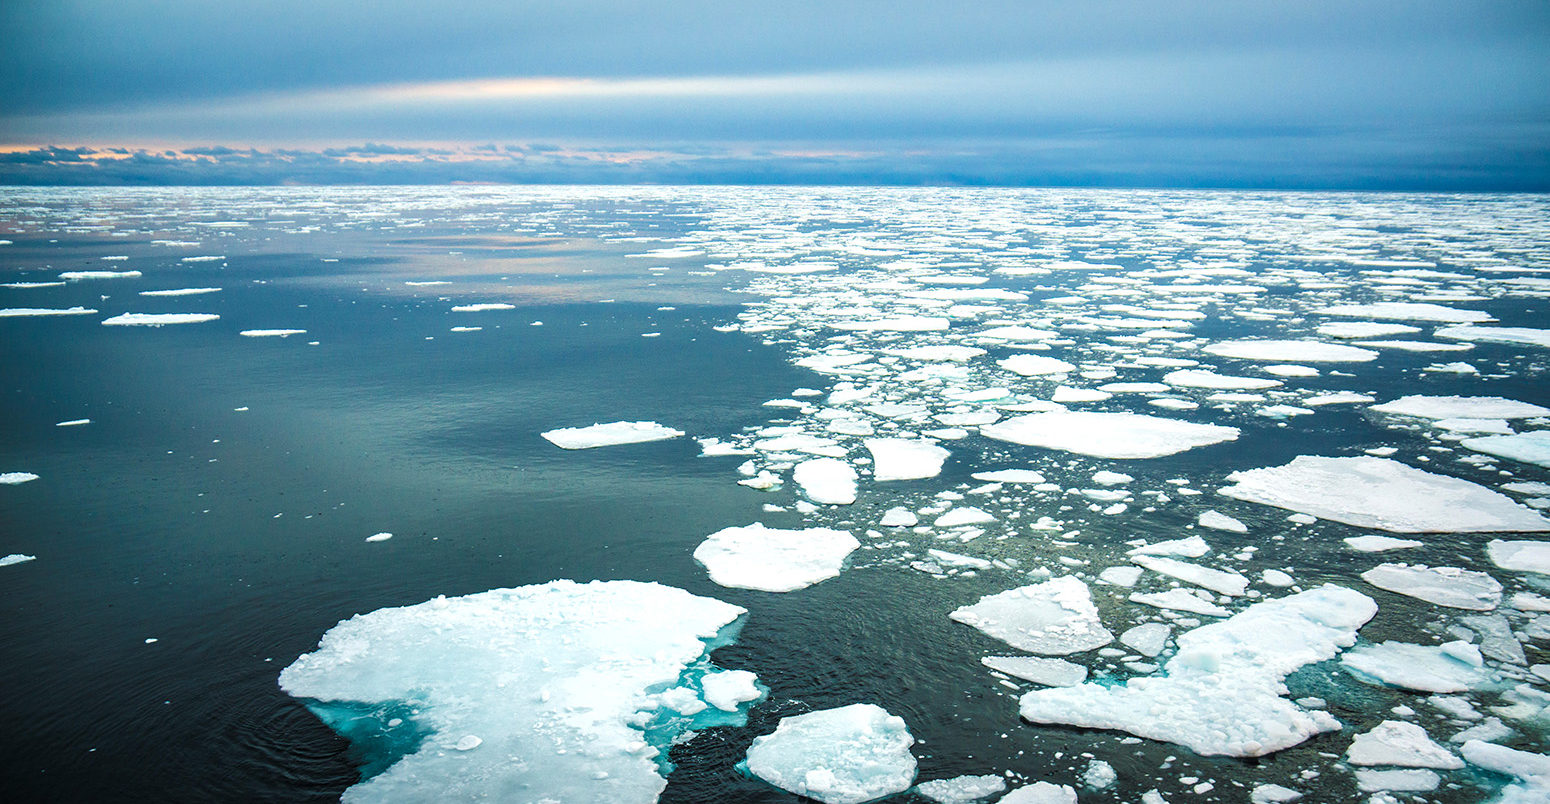 Arctic sea ice. Credit: Rowan Romeyn / Alamy Stock Photo. F7AKDM